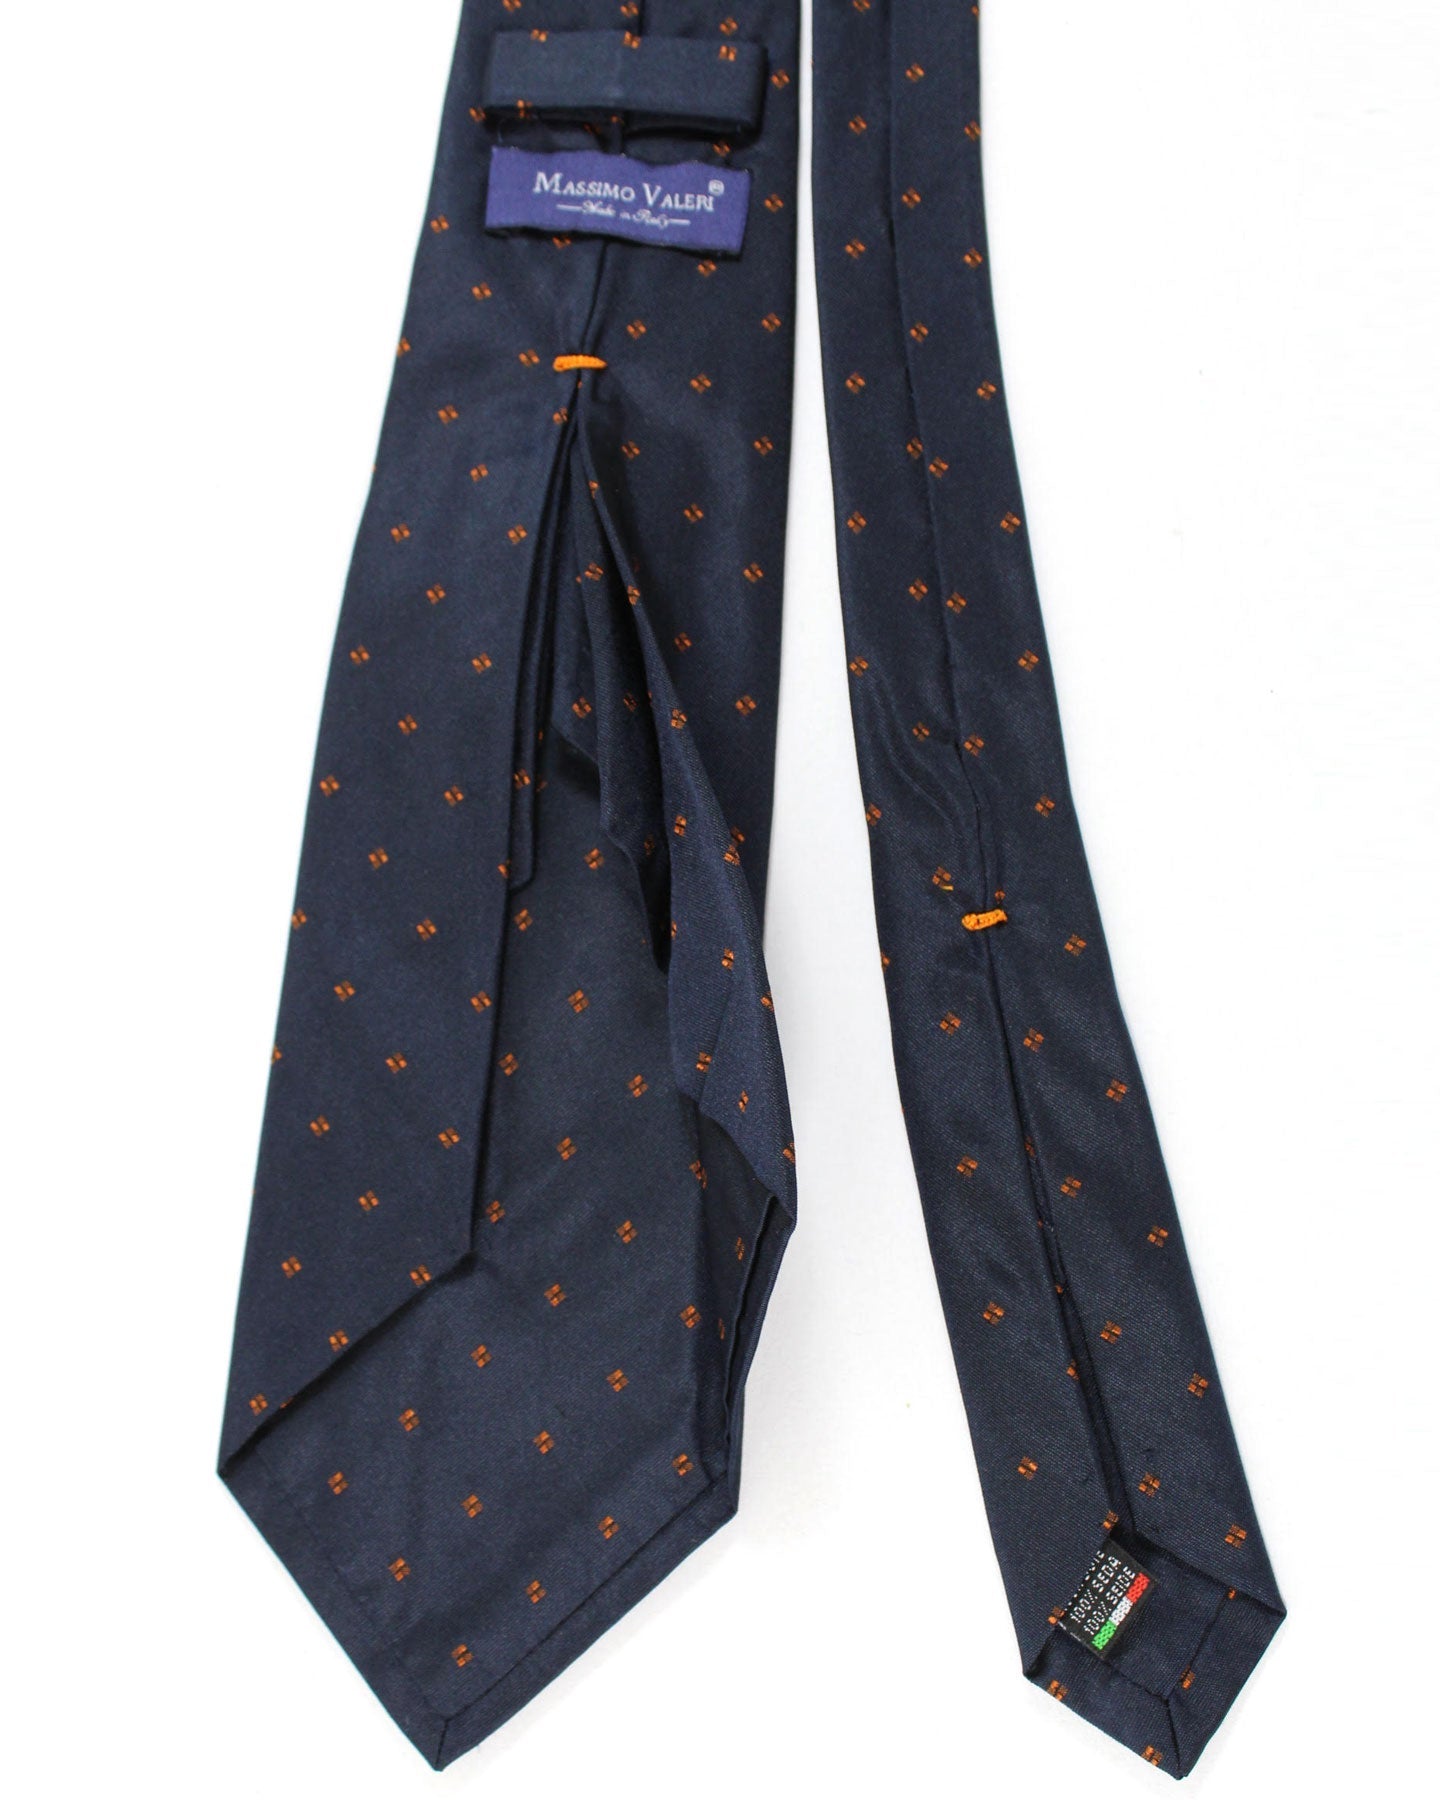 Massimo Valeri 11 Fold Tie Dark Blue Brown Geometric - Elevenfold Necktie